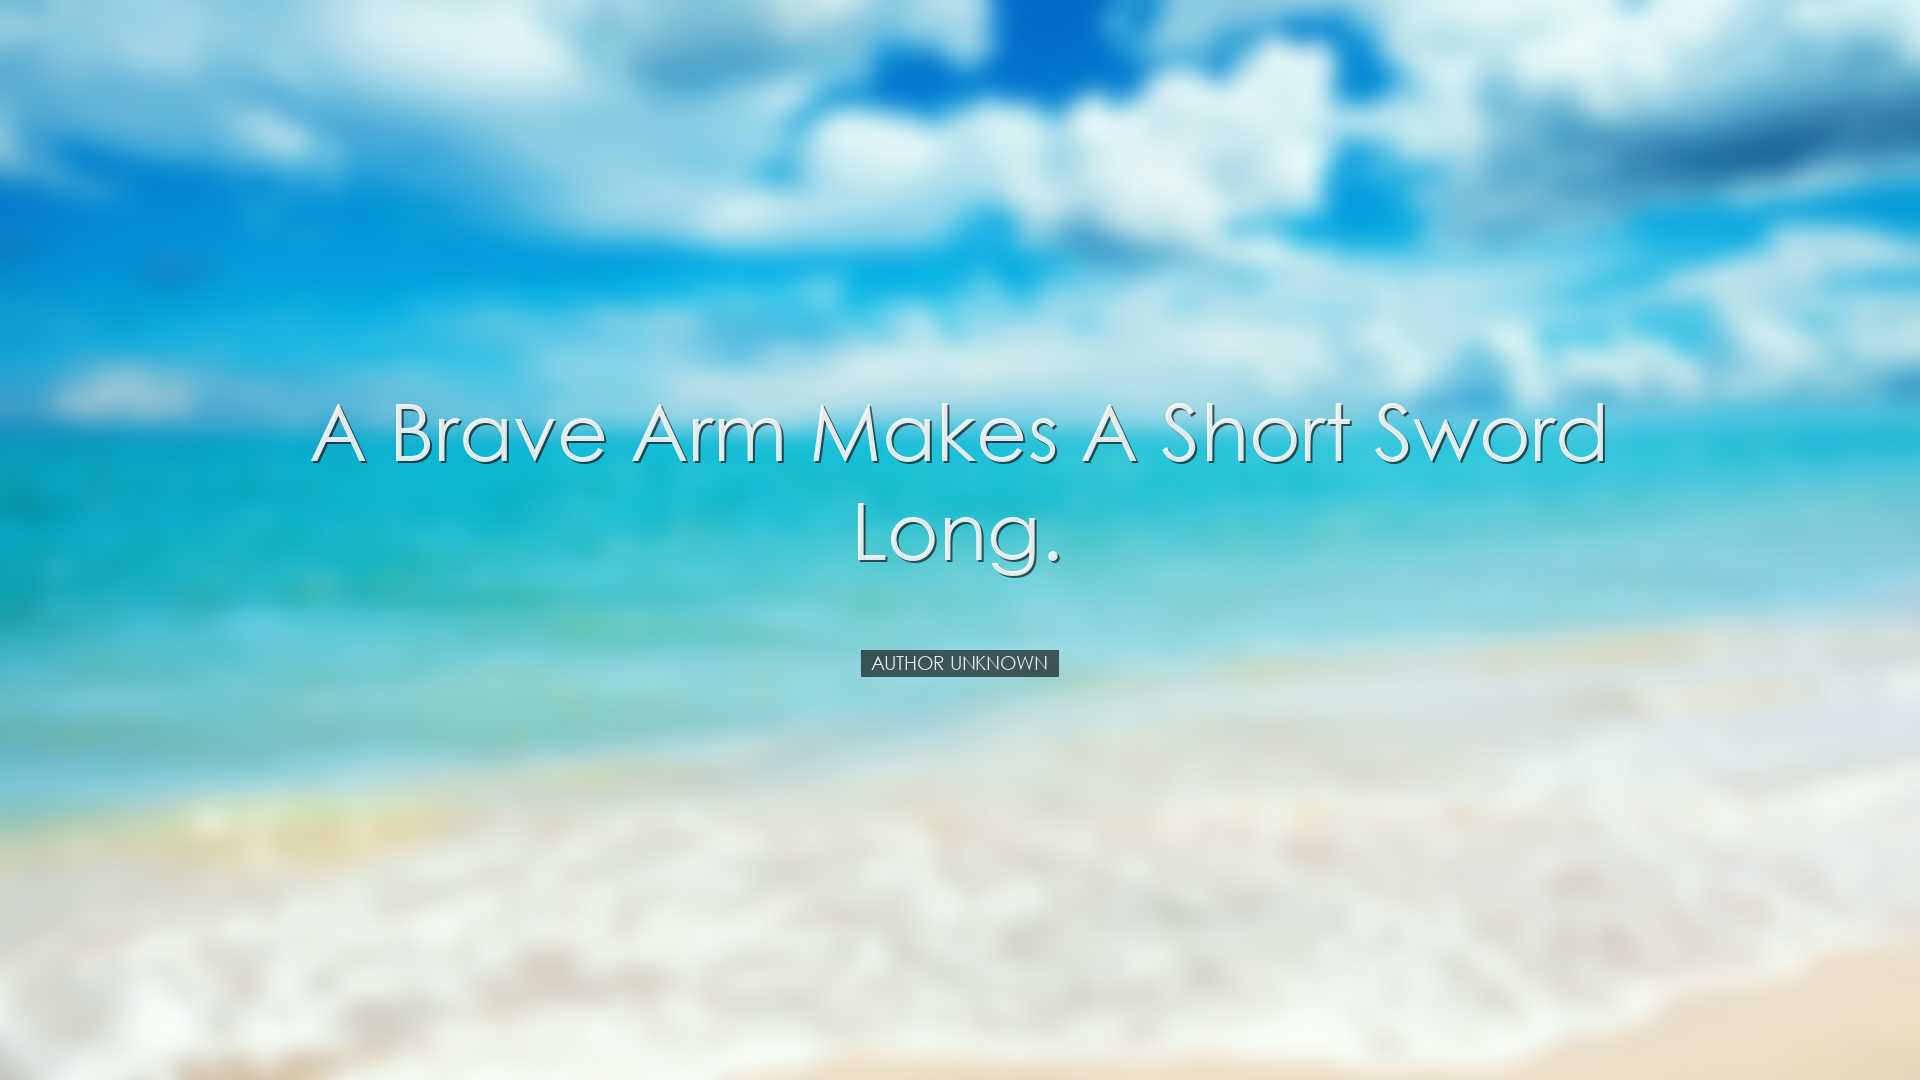 A brave arm makes a short sword long. - Author Unknown